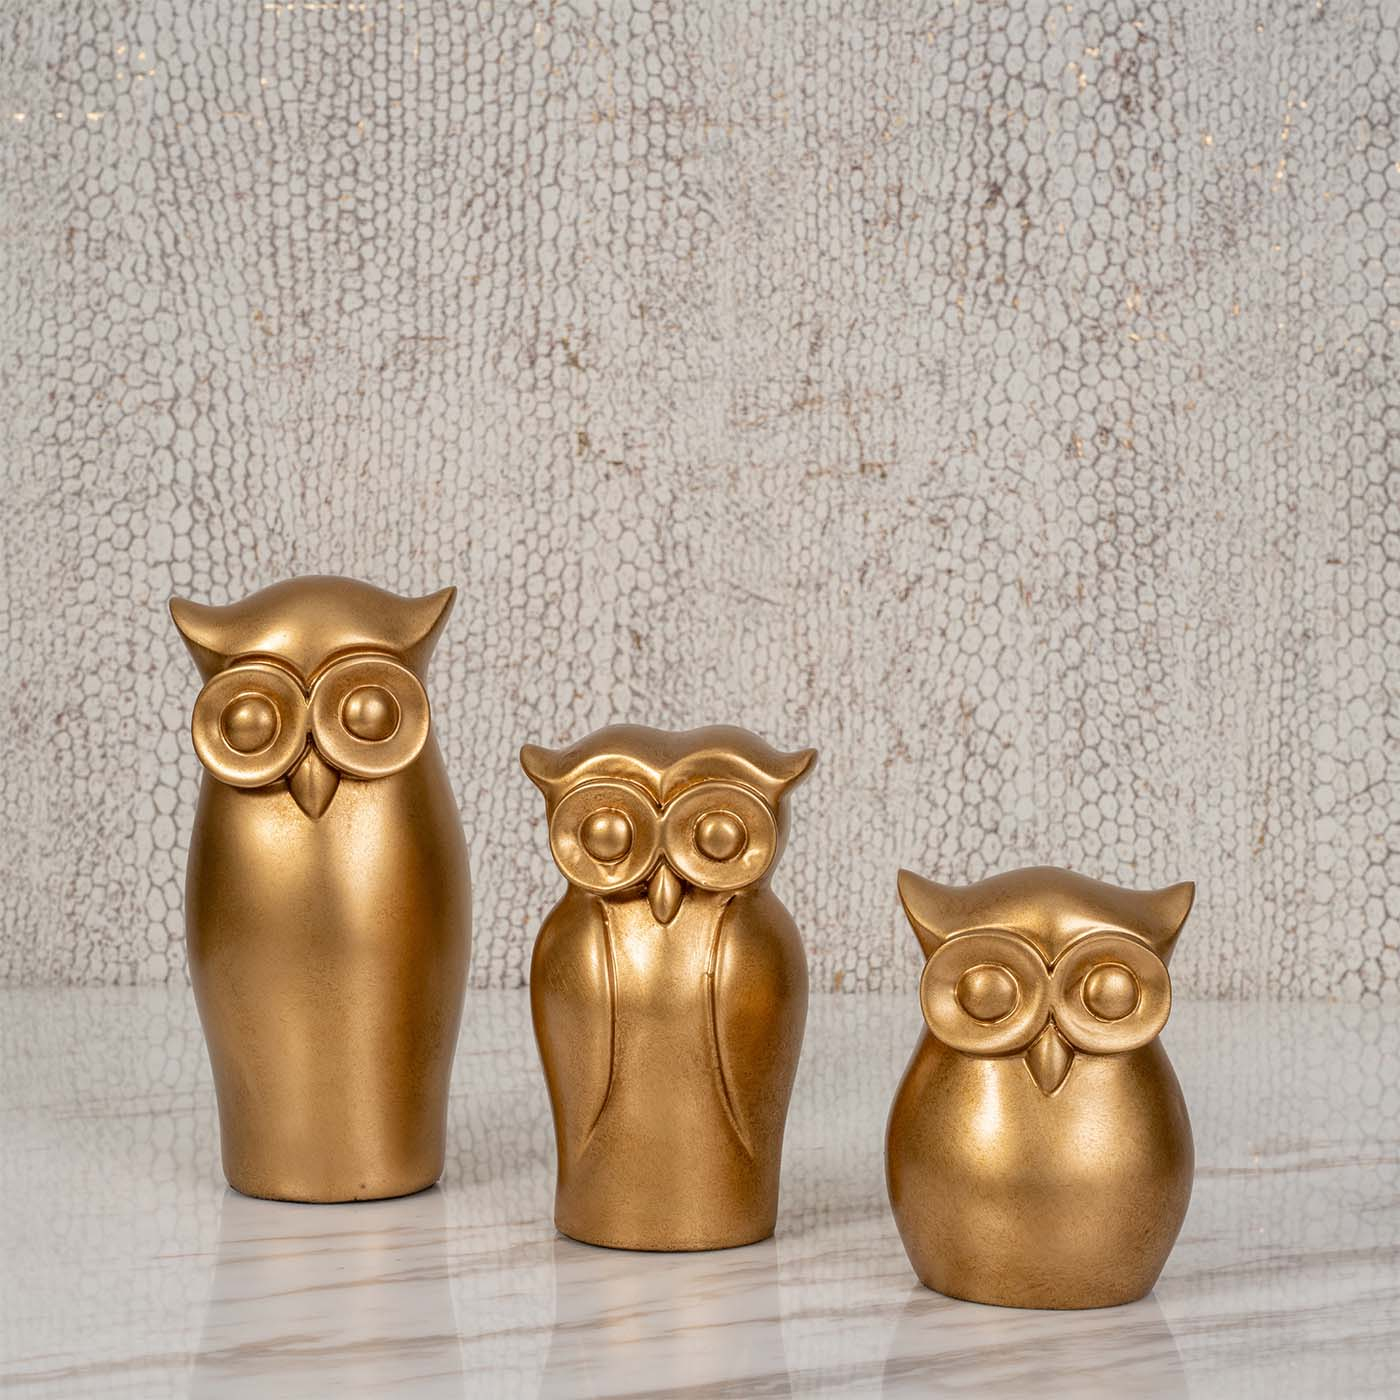 Owl Accessories